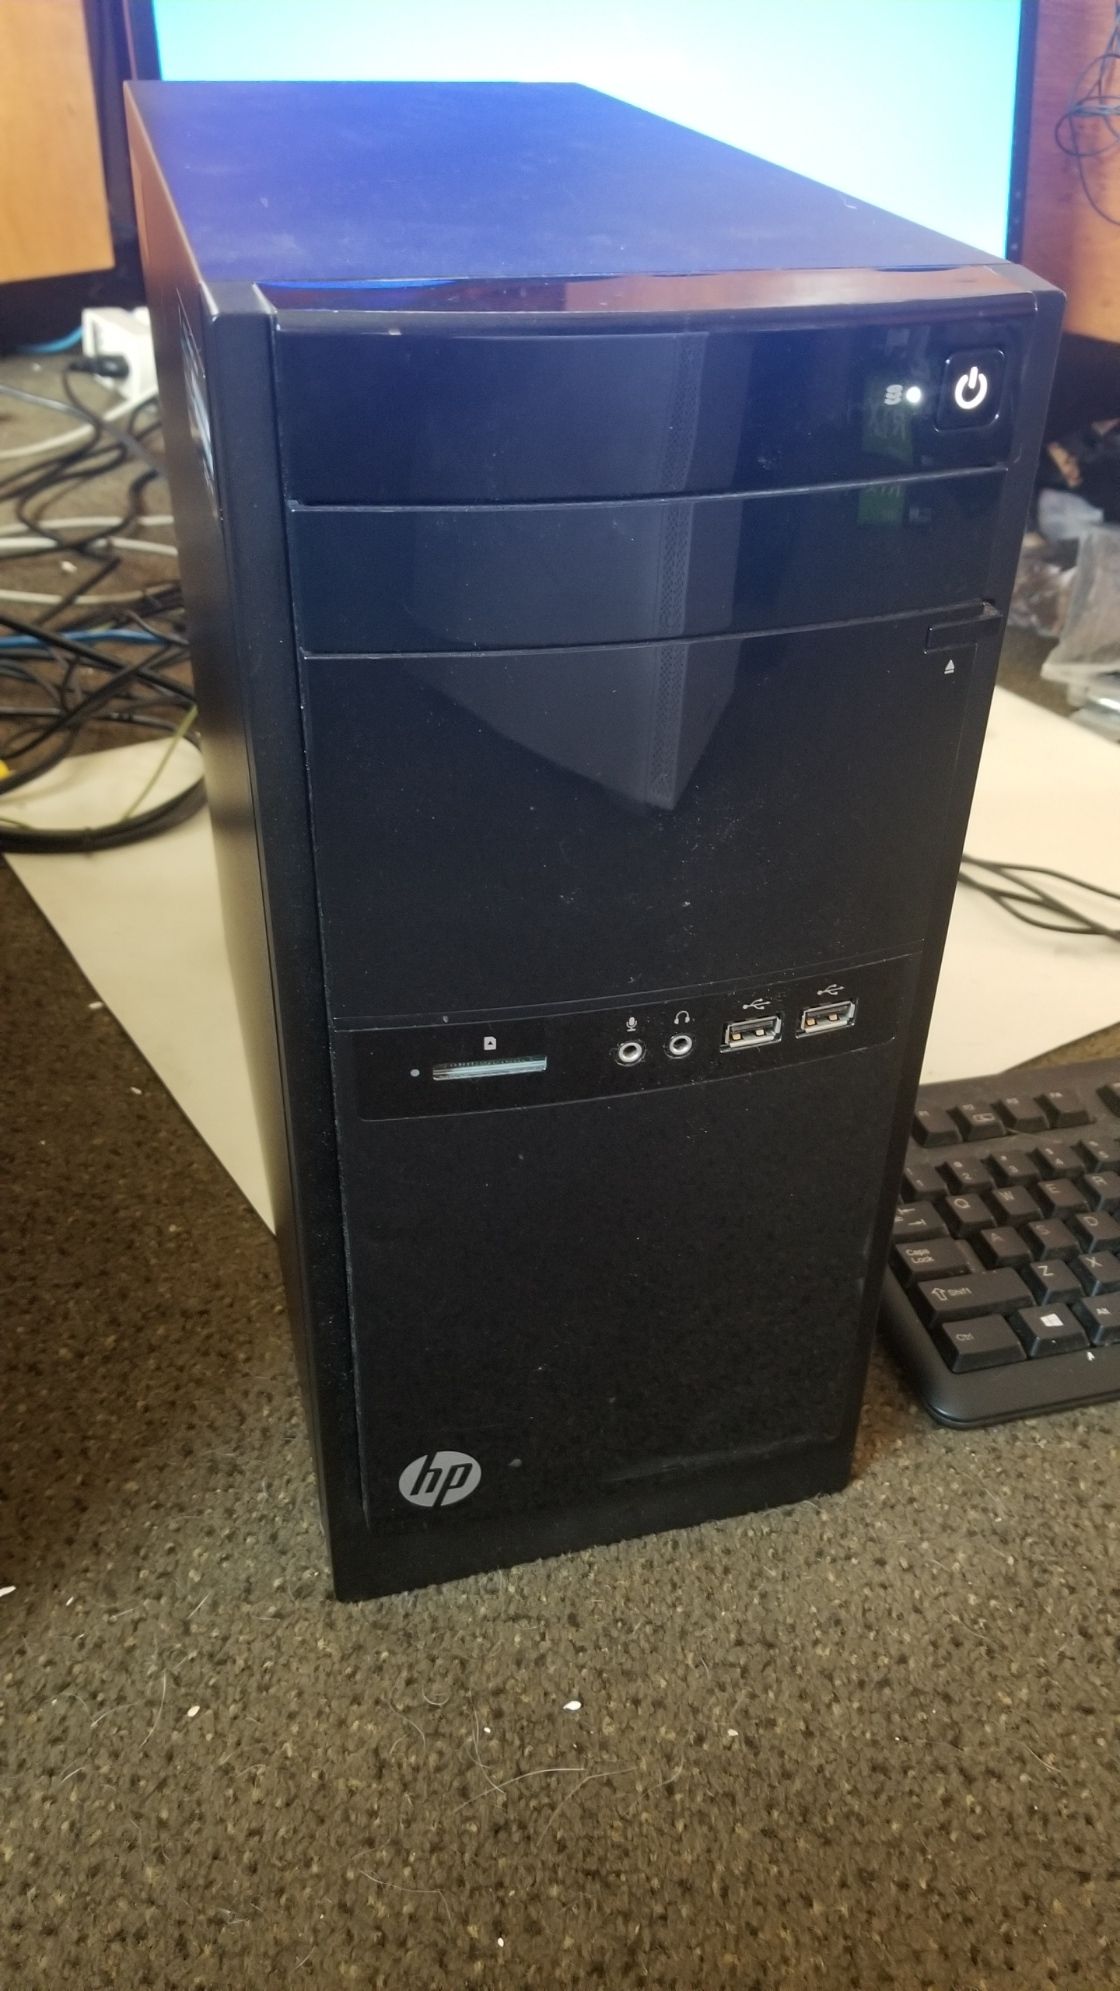 HP Quad-Core Desktop Computer w/ 19" monitor, keyboard, mouse